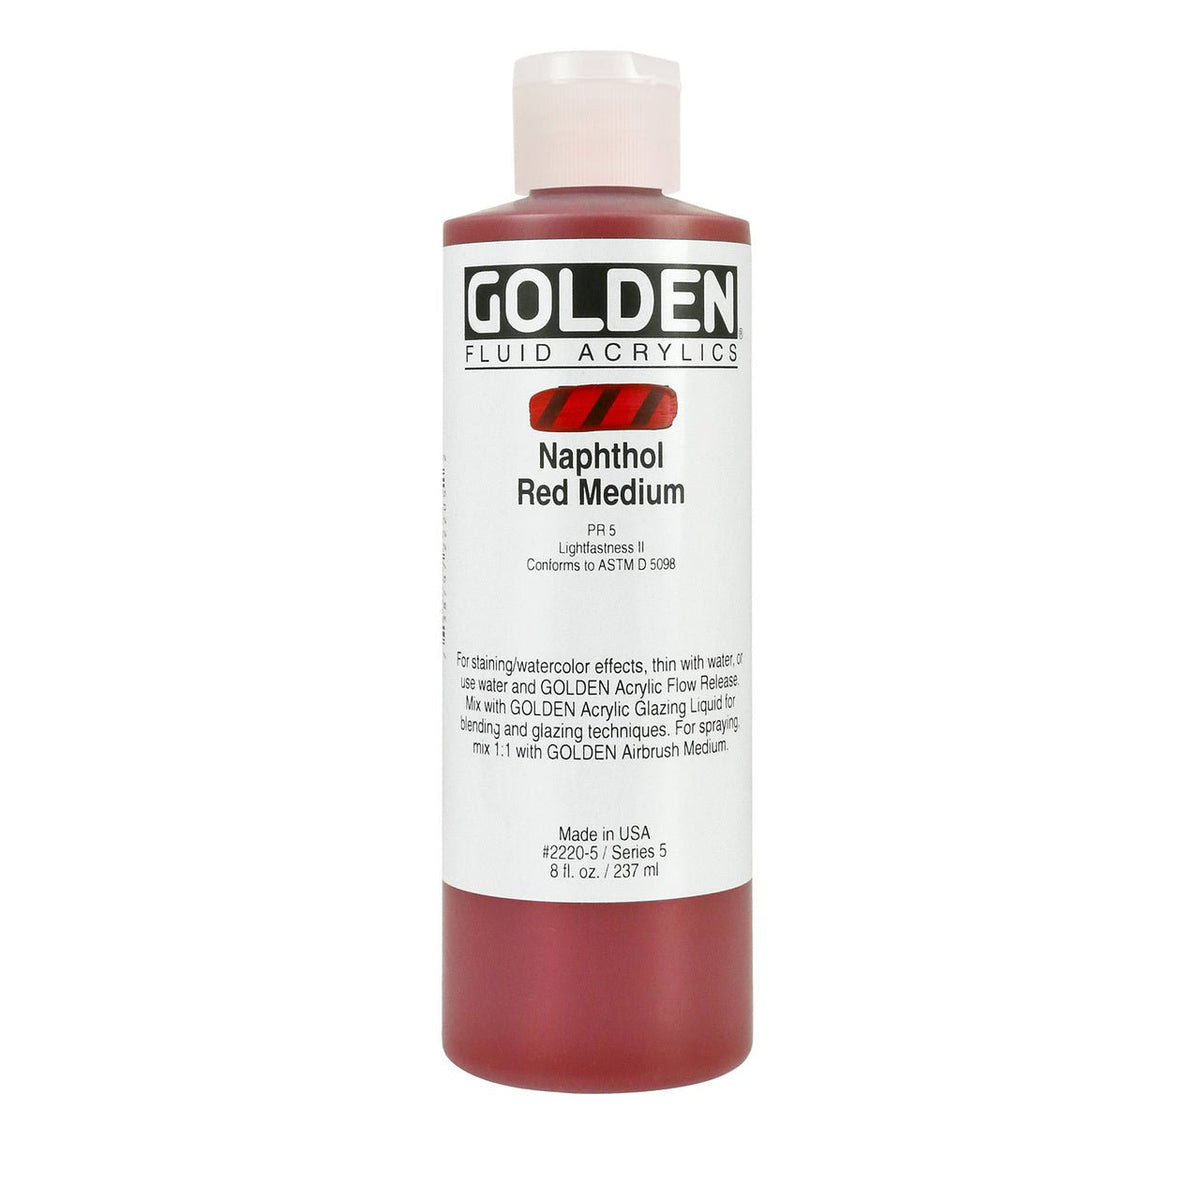 Golden Fluid Acrylic Naphthol Red Medium 8 oz - merriartist.com